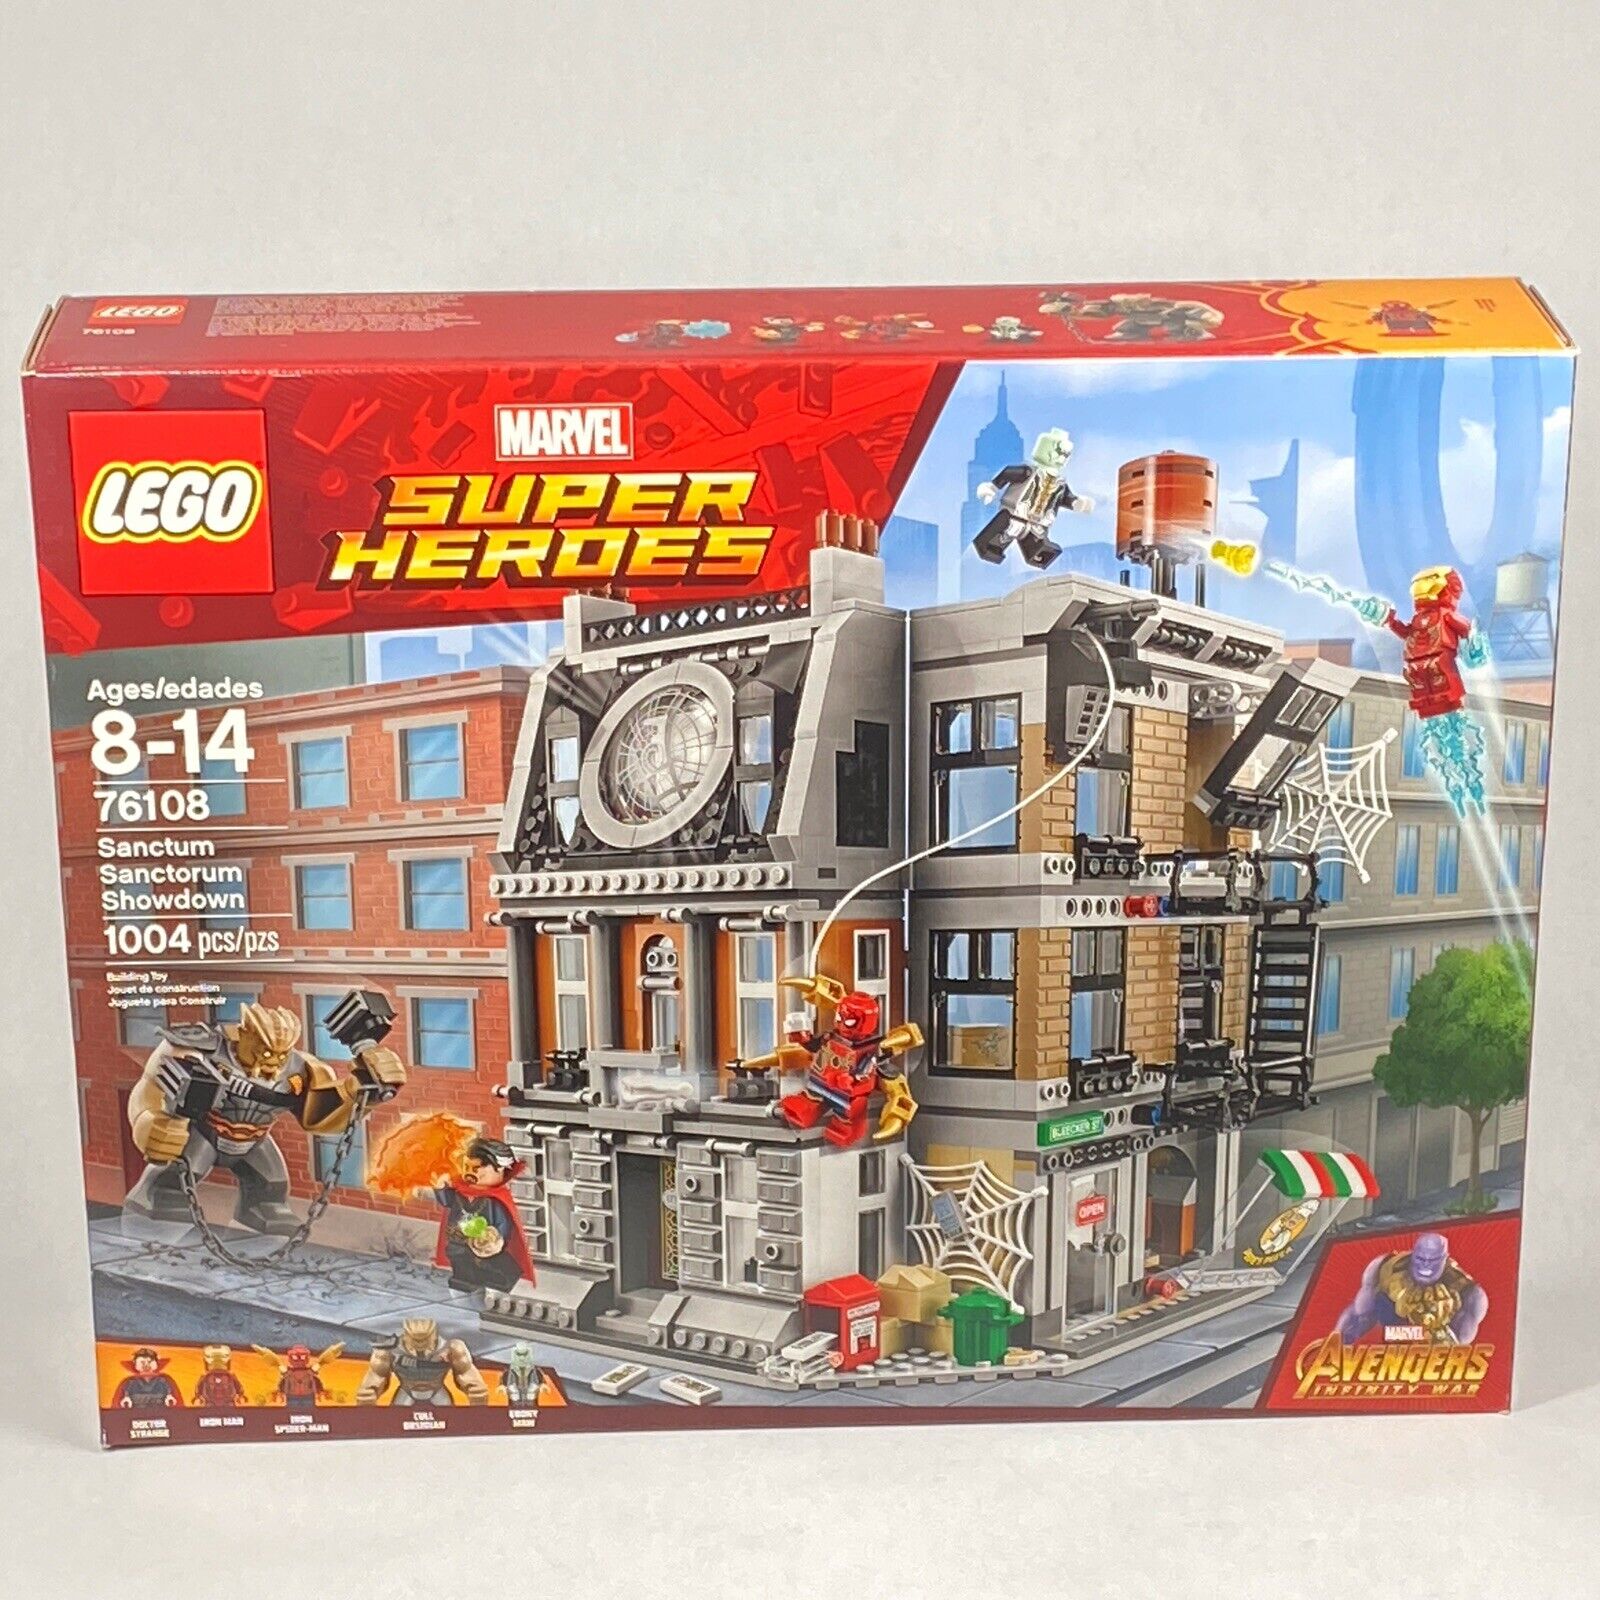 LEGO Marvel Super Heroes Sanctum Sanctorum Showdown (76108) - 1004 Pieces